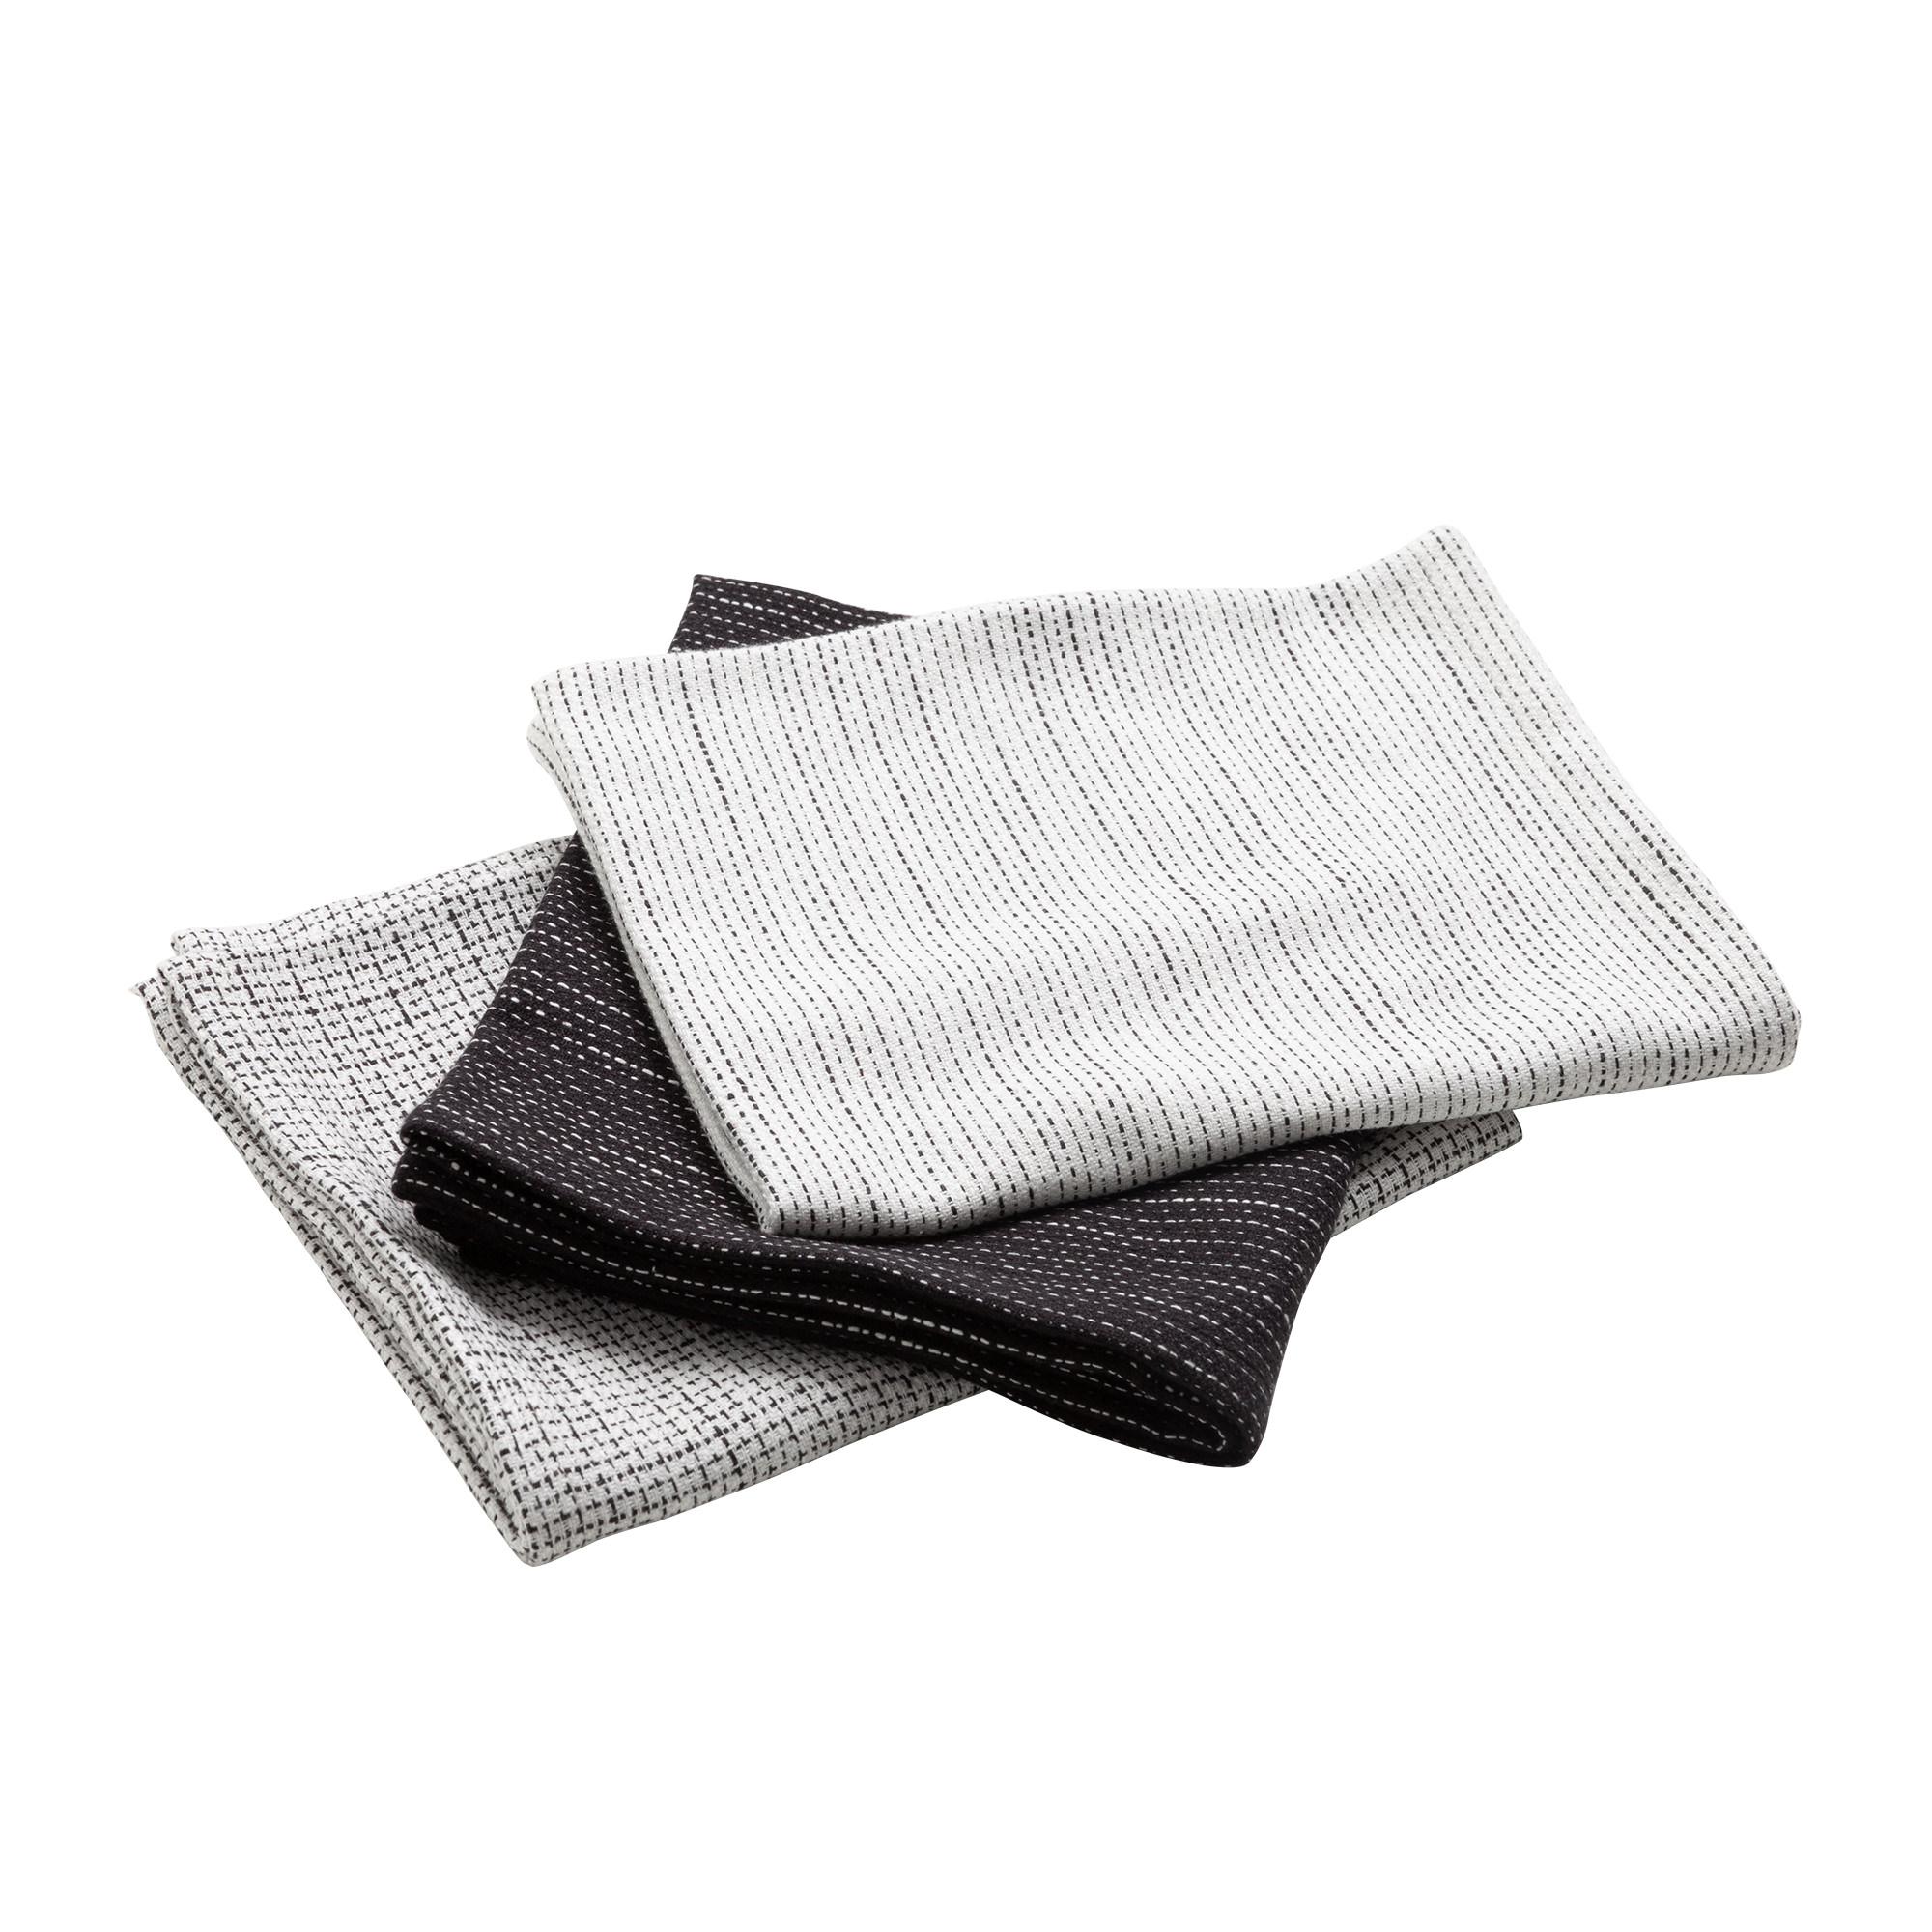 Salisbury & Co Devon Tea Towel Set of 3 Black and White Image 3